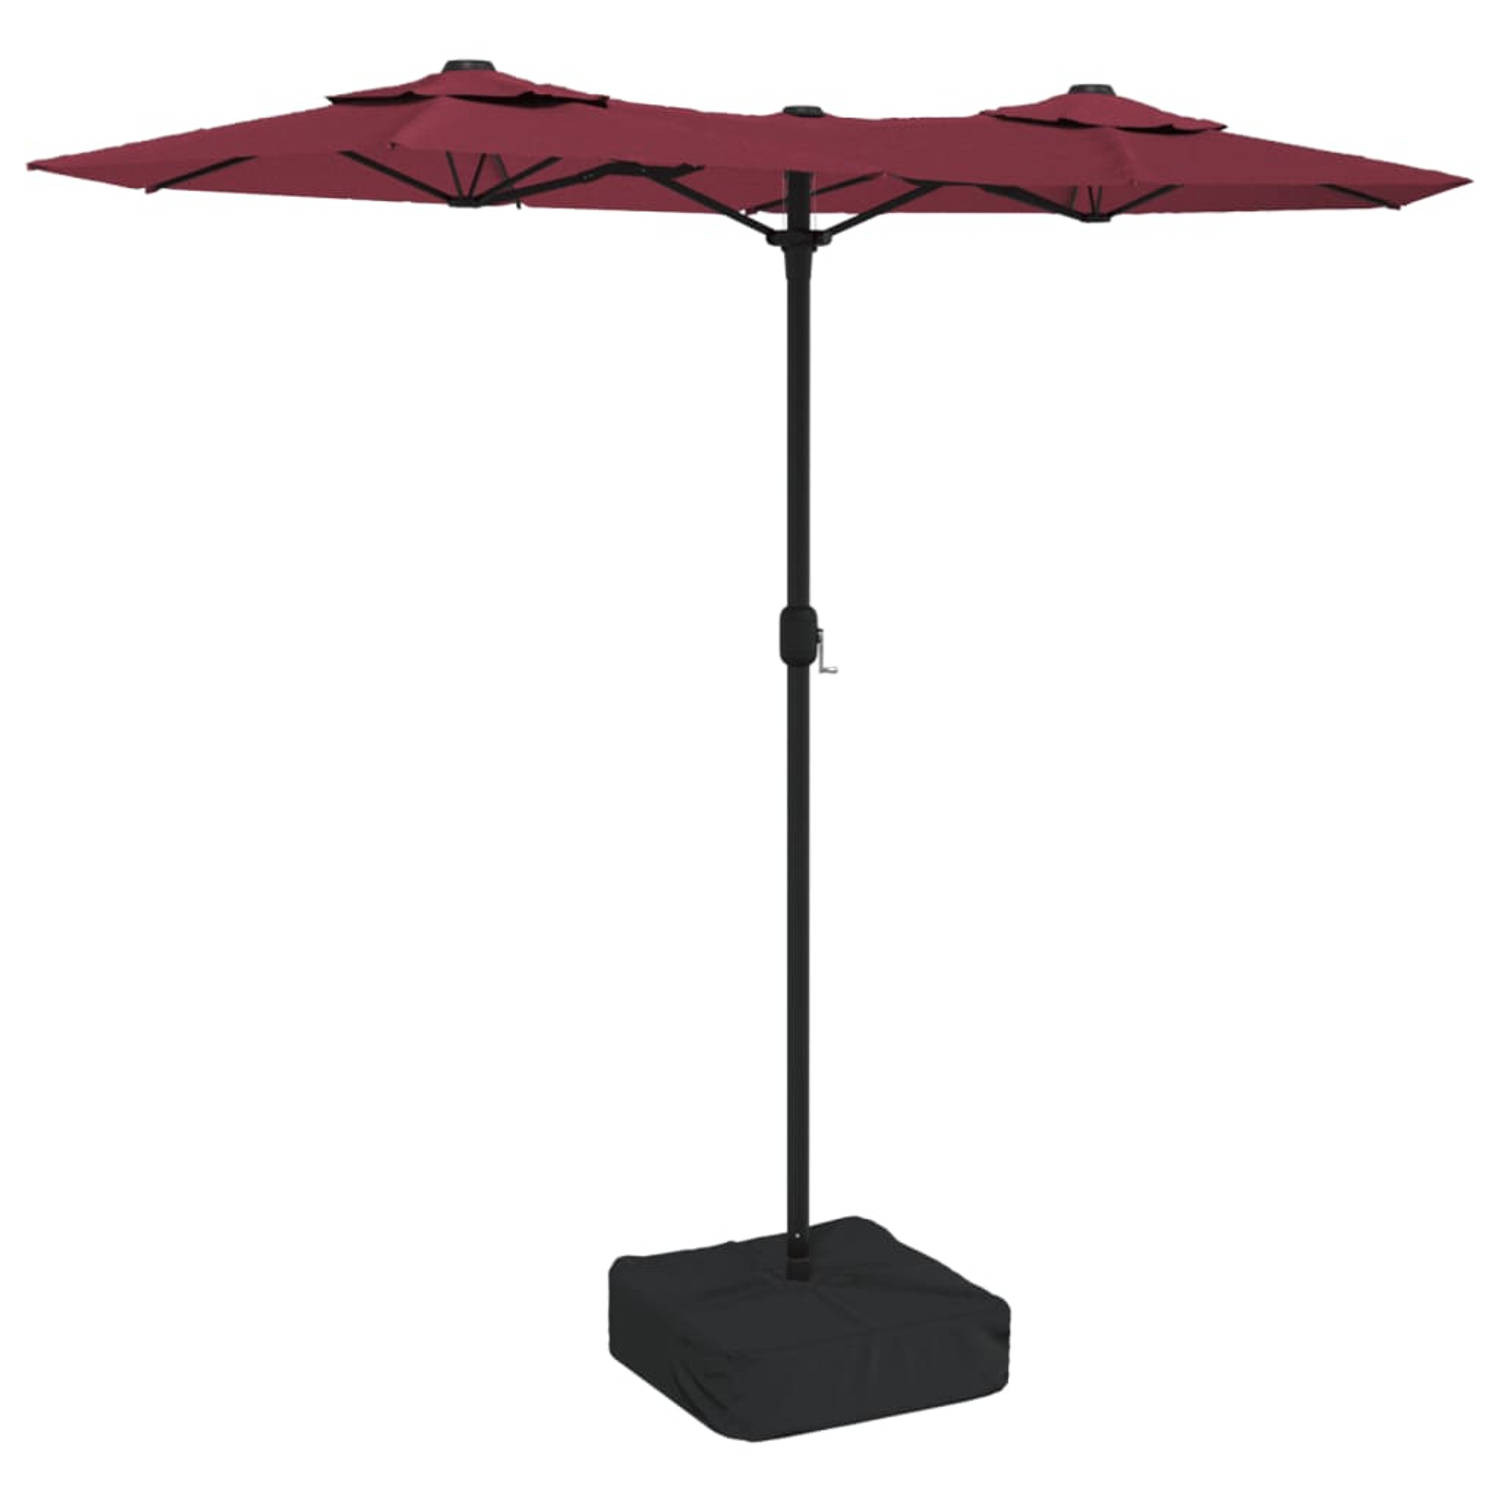 The Living Store Dubbele parasol - Bordeauxrood/donkergrijs - 316x145x240cm - UV-bescherming - Sterk frame -